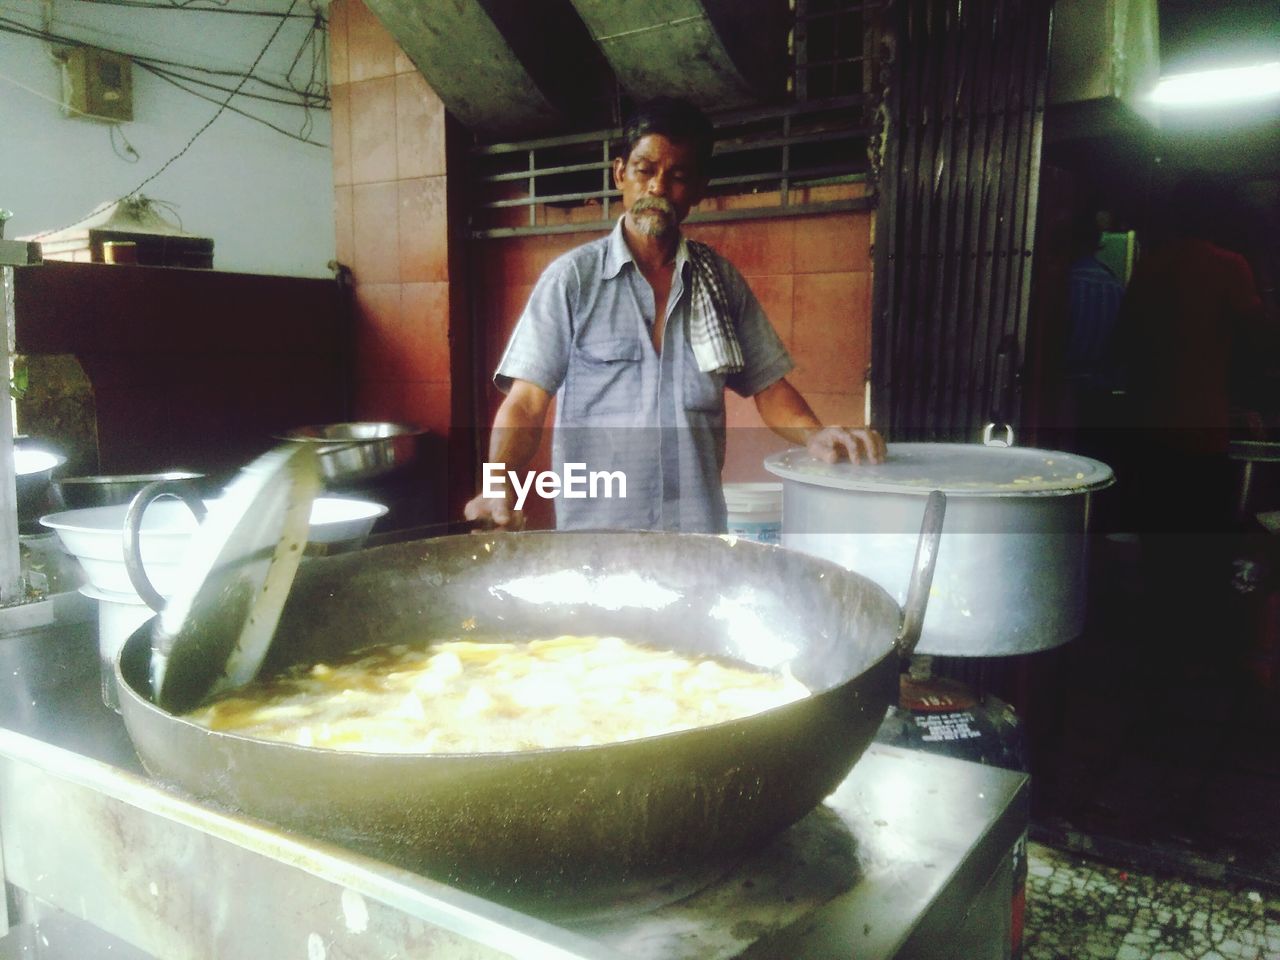 Vendor cooking food in large frying pan